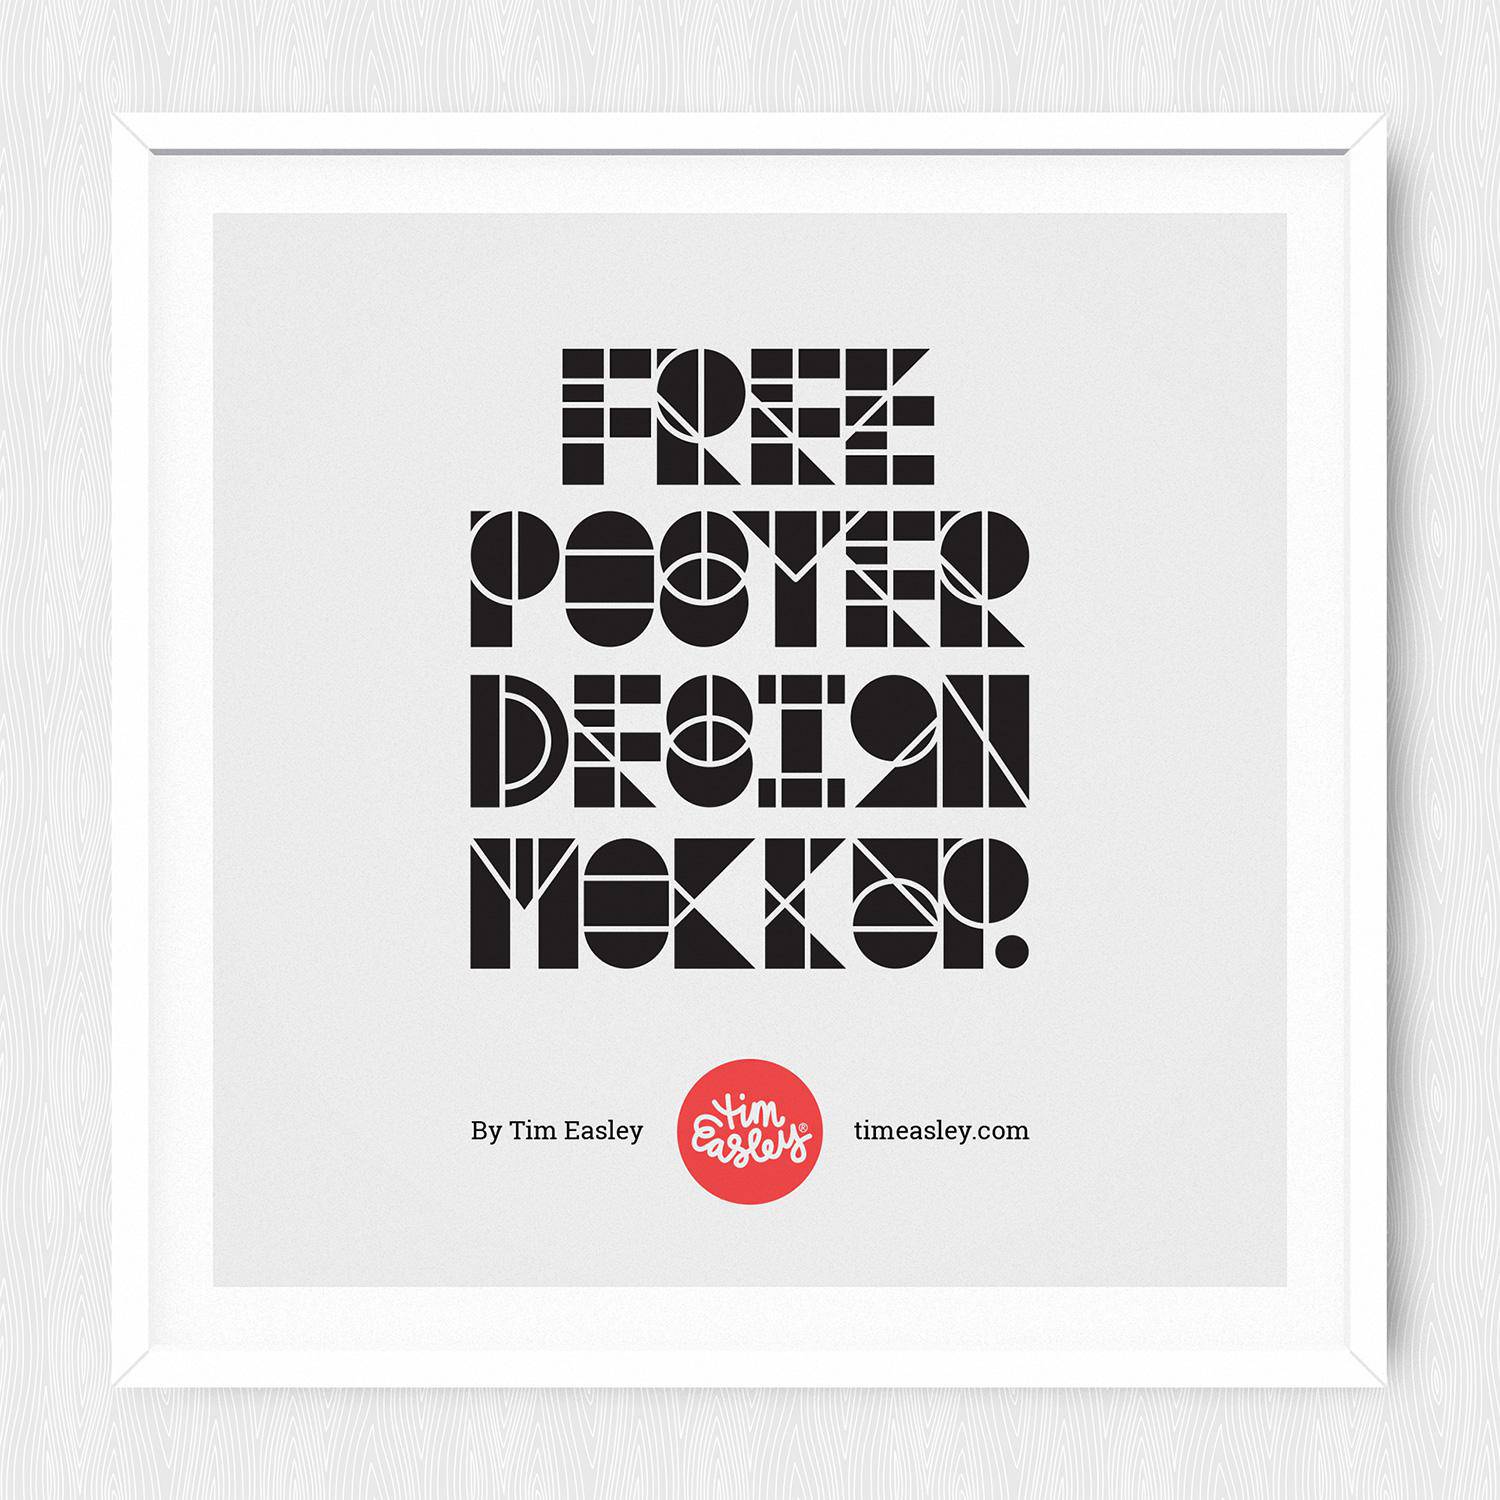 Free-Poster-Design-Mockup-5